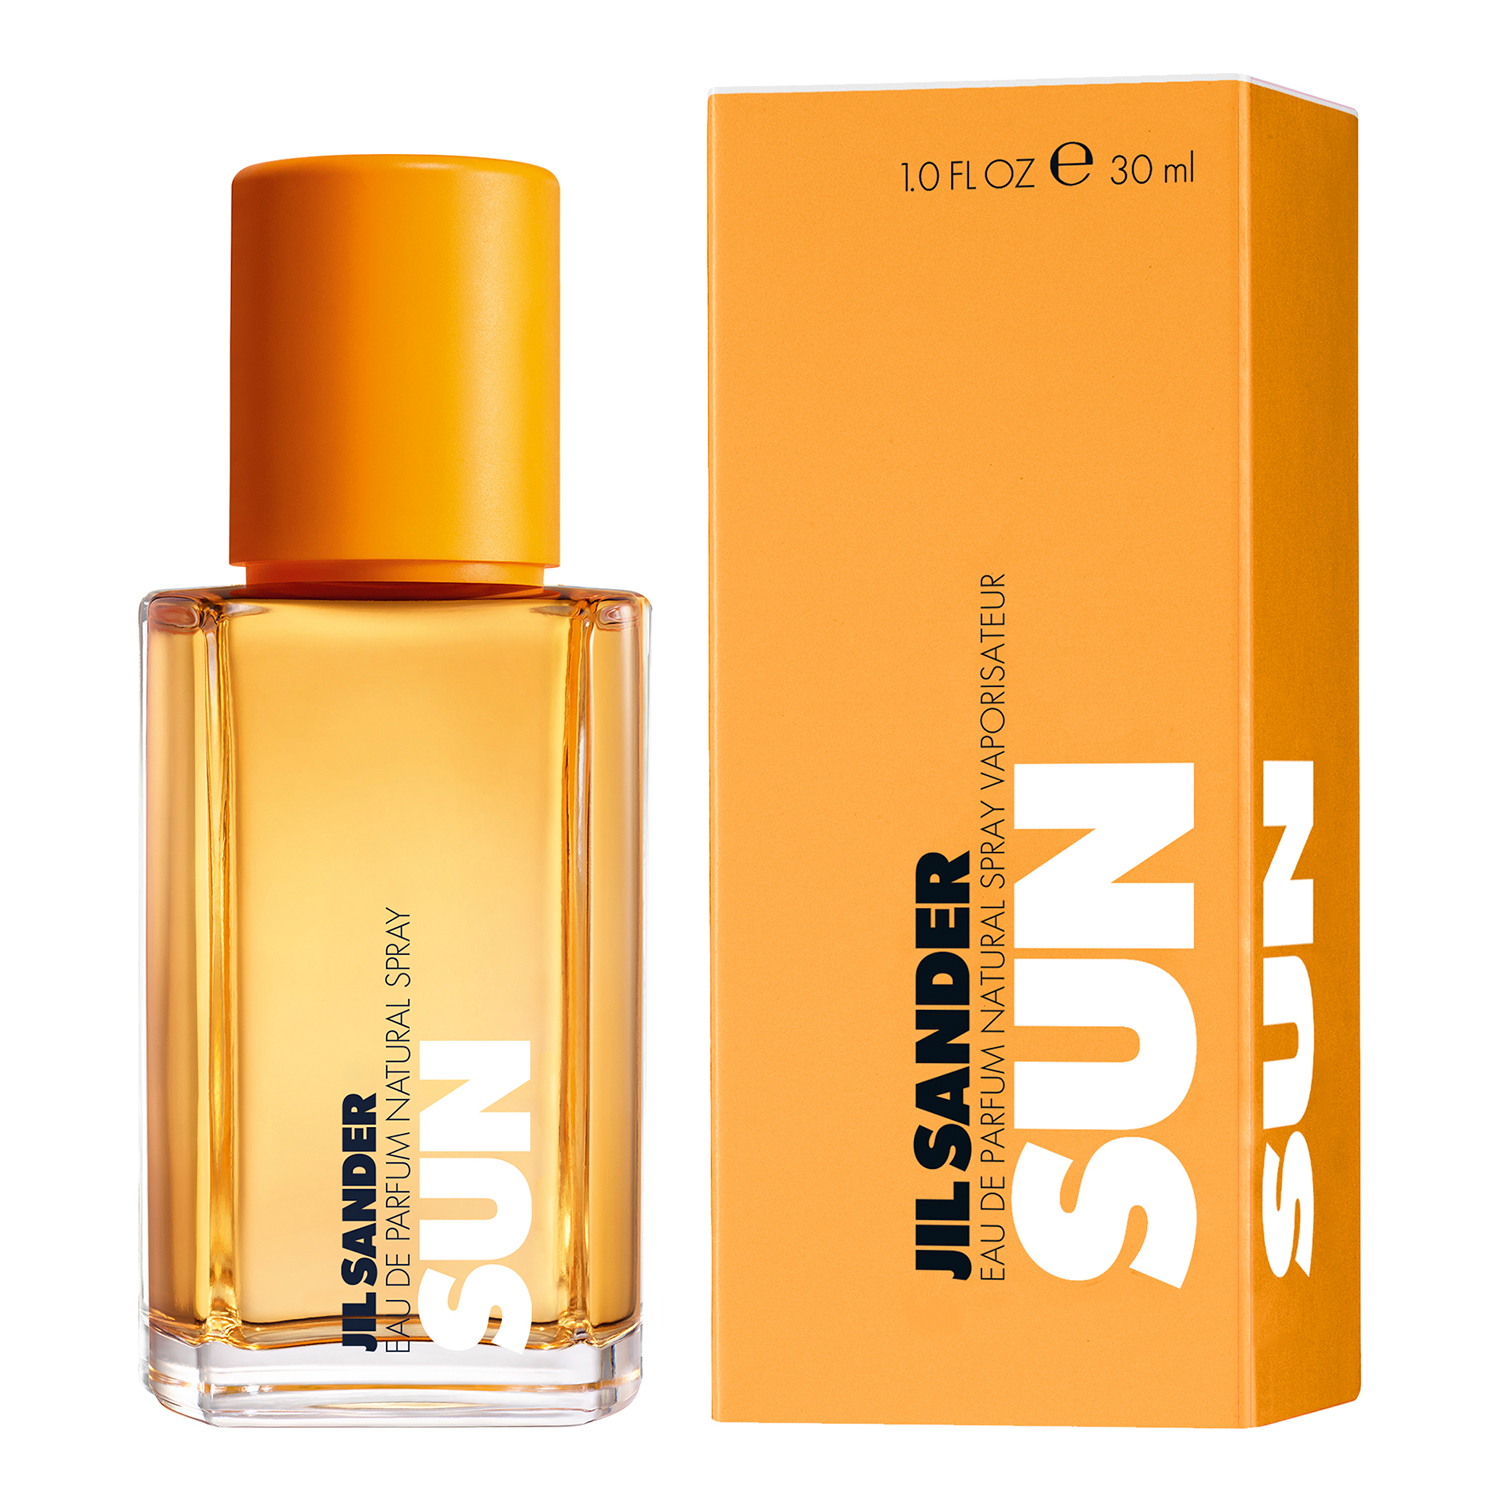 Sun Eau de Parfum Jil Sander perfume - a fragrance for women 2020